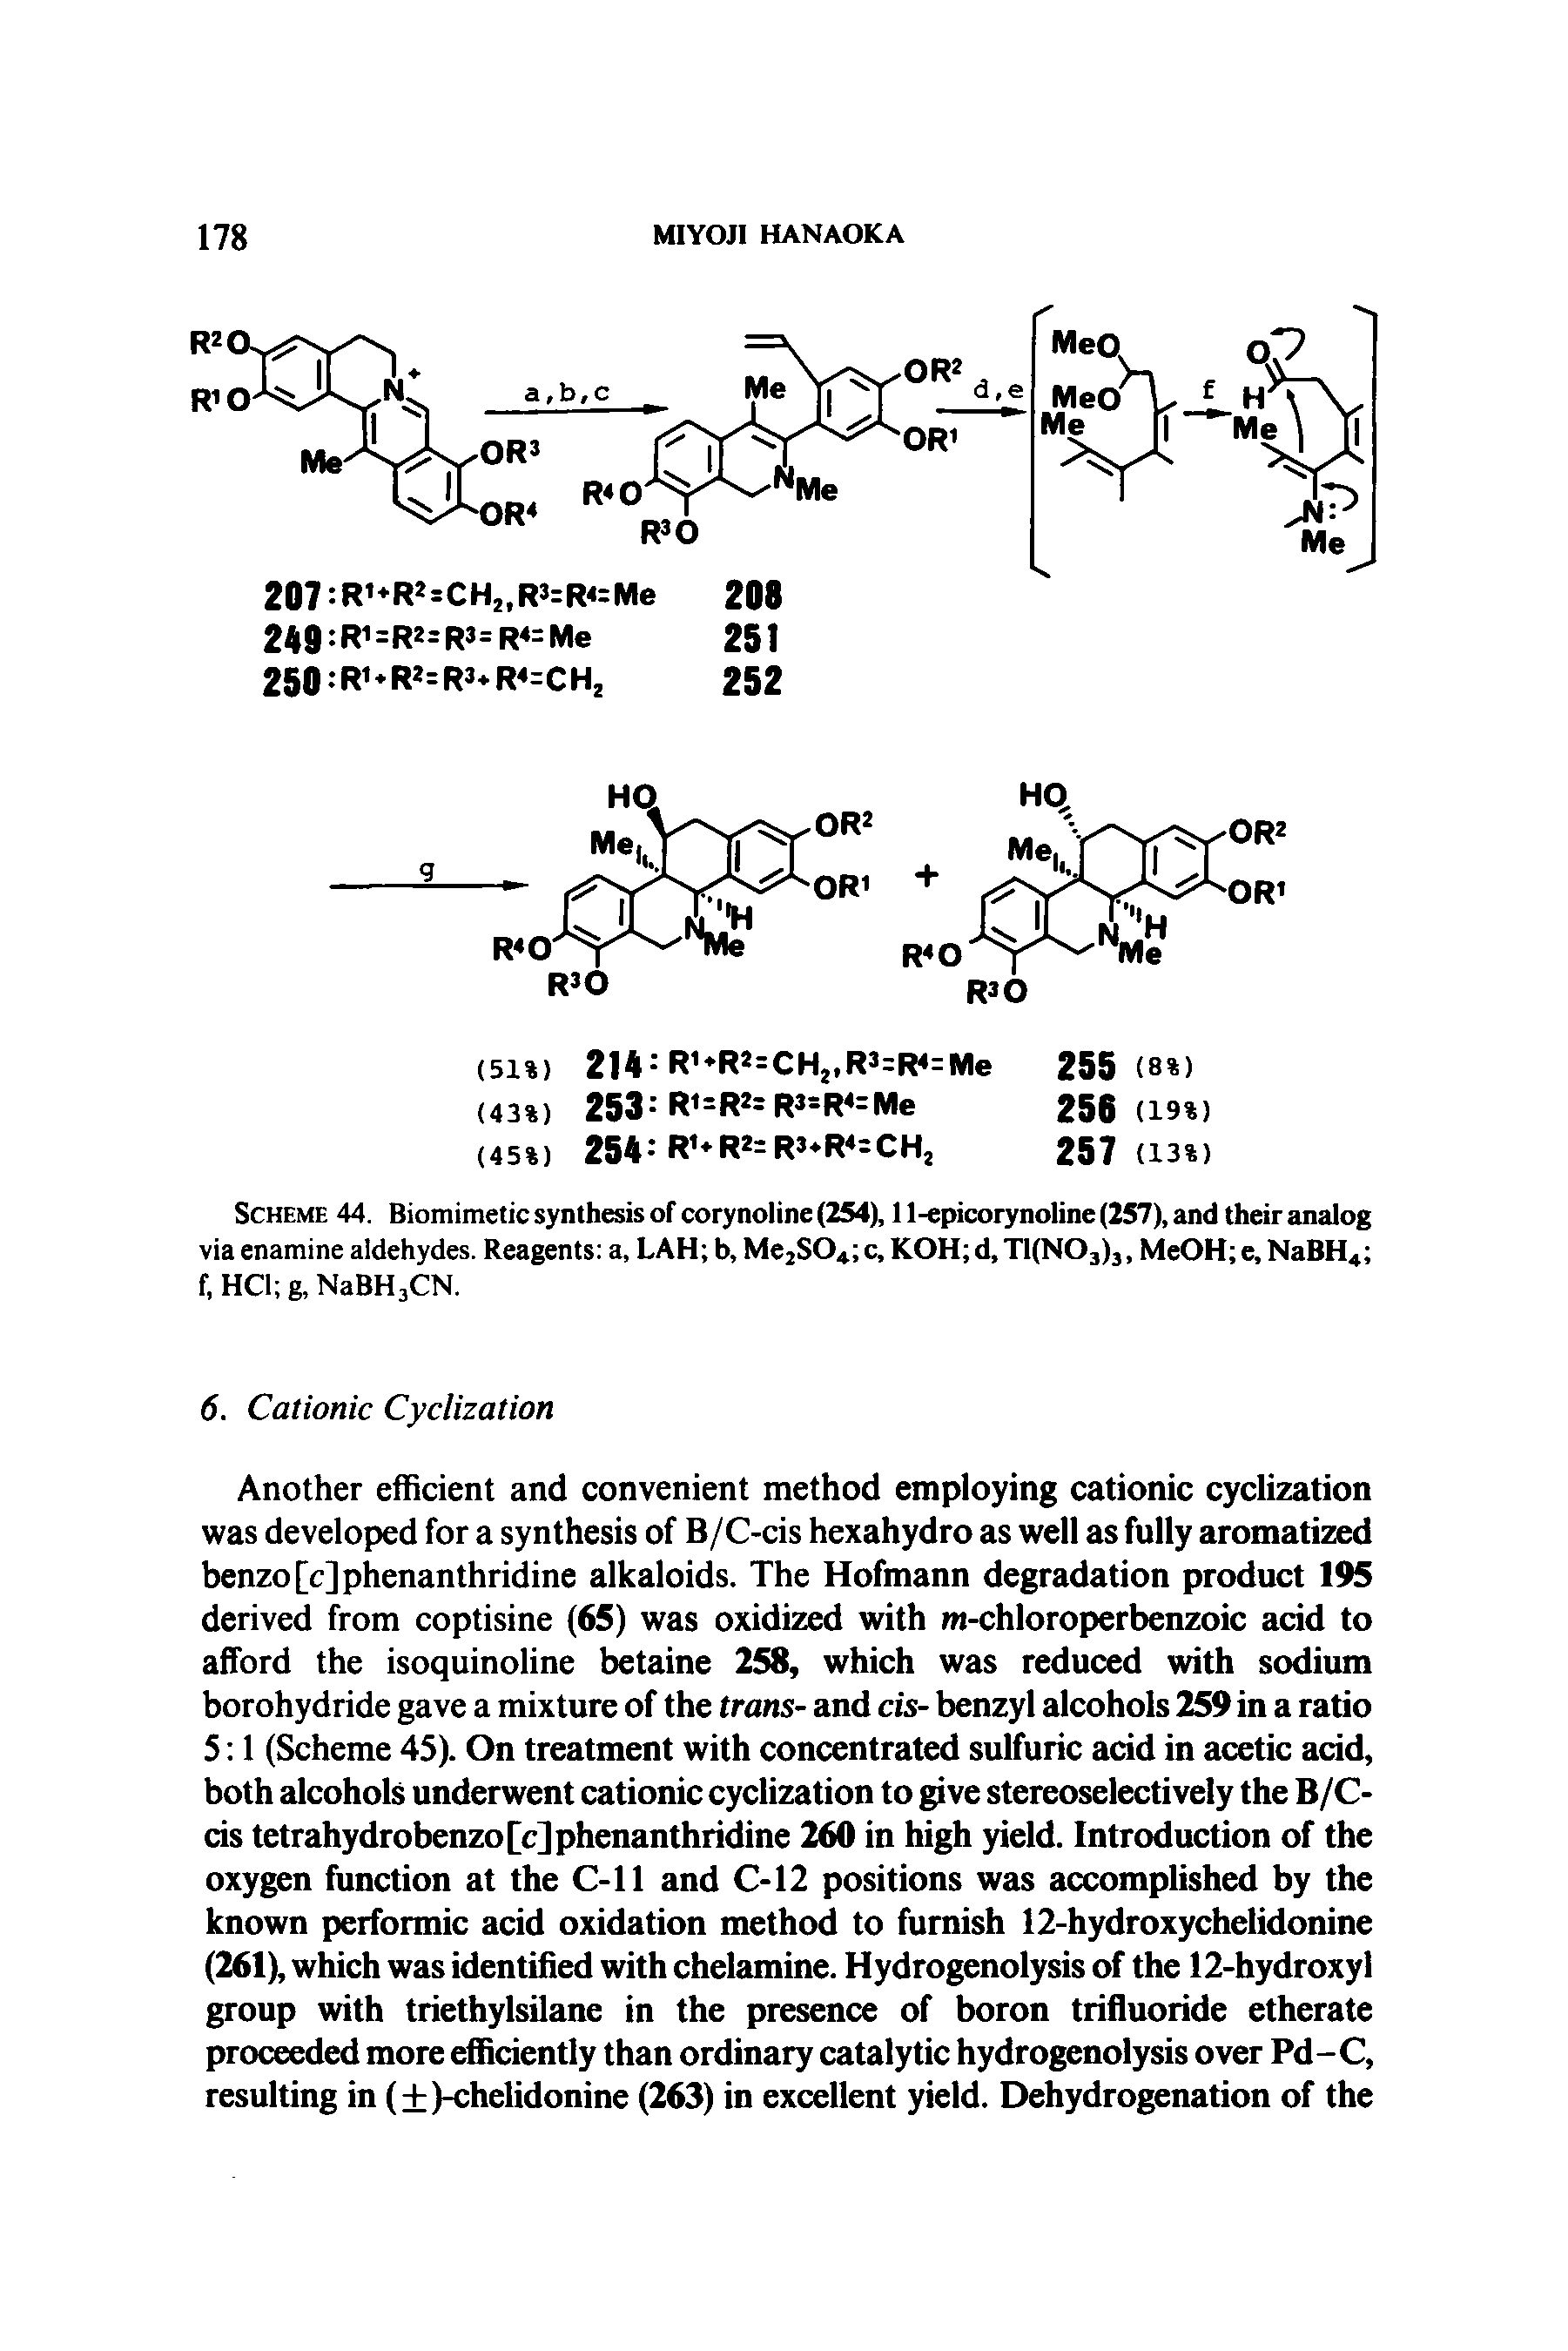 Scheme 44. Biomimetic synthesis of corynoline (254), 11-epicorynoline (257), and their analog via enamine aldehydes. Reagents a, LAH b, Me2SC>4. c, KOH d, T1(N03)3, MeOH e, NaBH4 f, HC1 g, NaBH3CN.